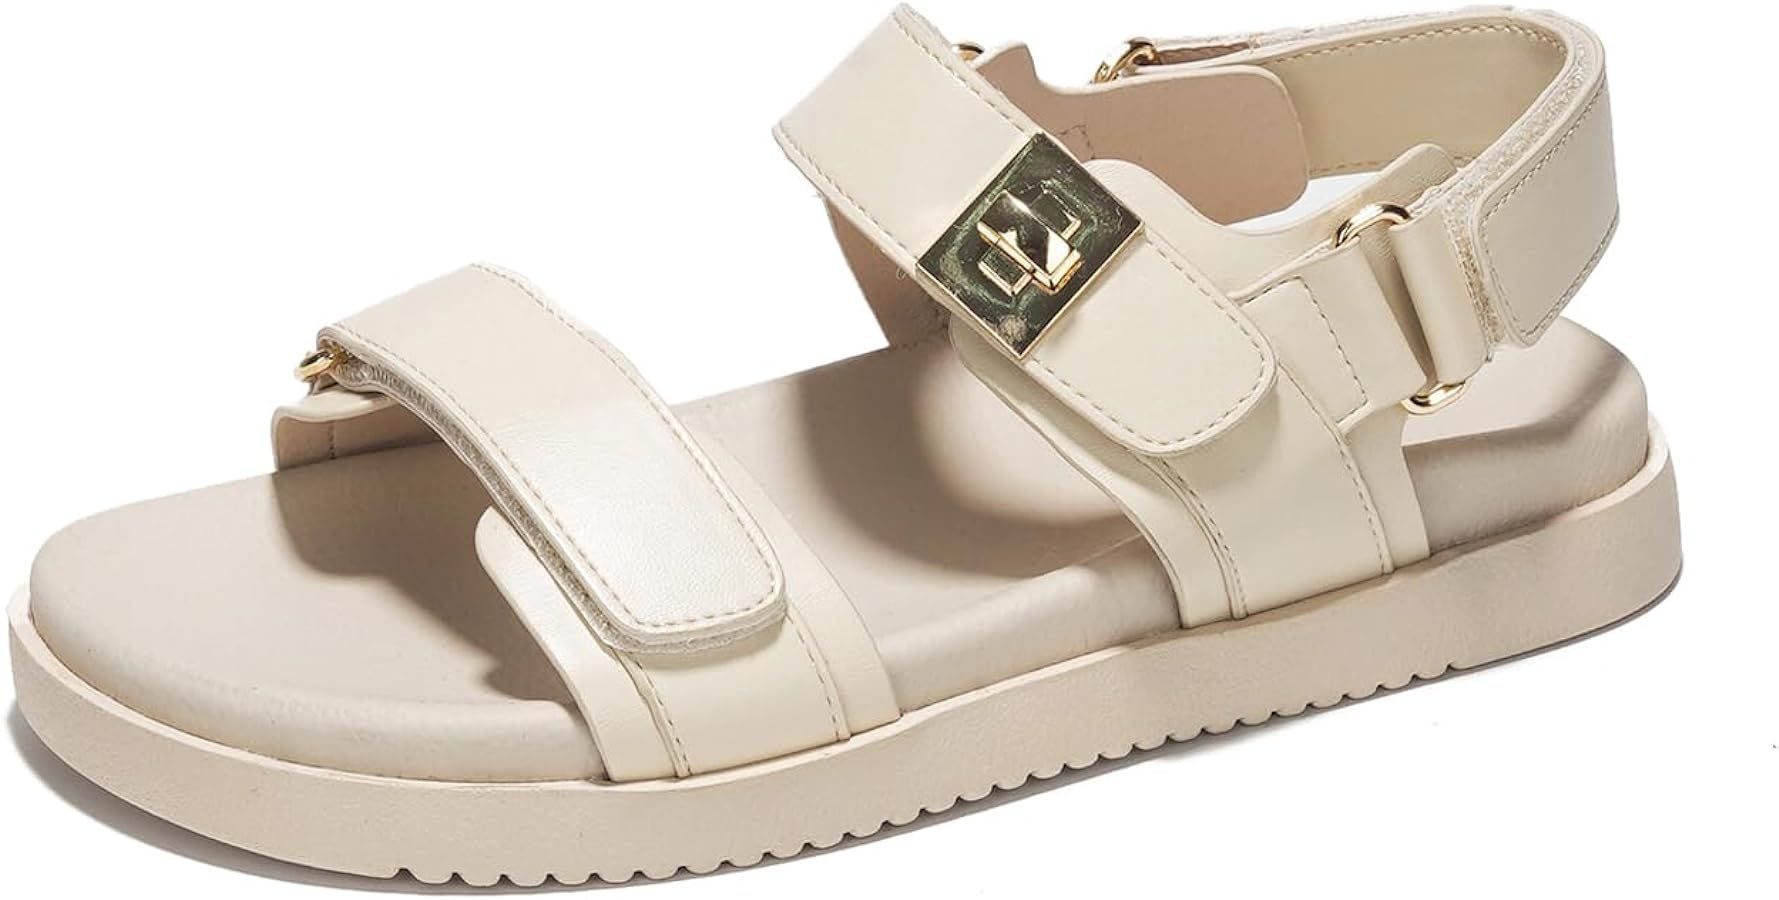 Leather Sandals Women Comfortable Adjustable Straps - Comfy Flat Sandals for Women - Memory Foam ... | Amazon (US)